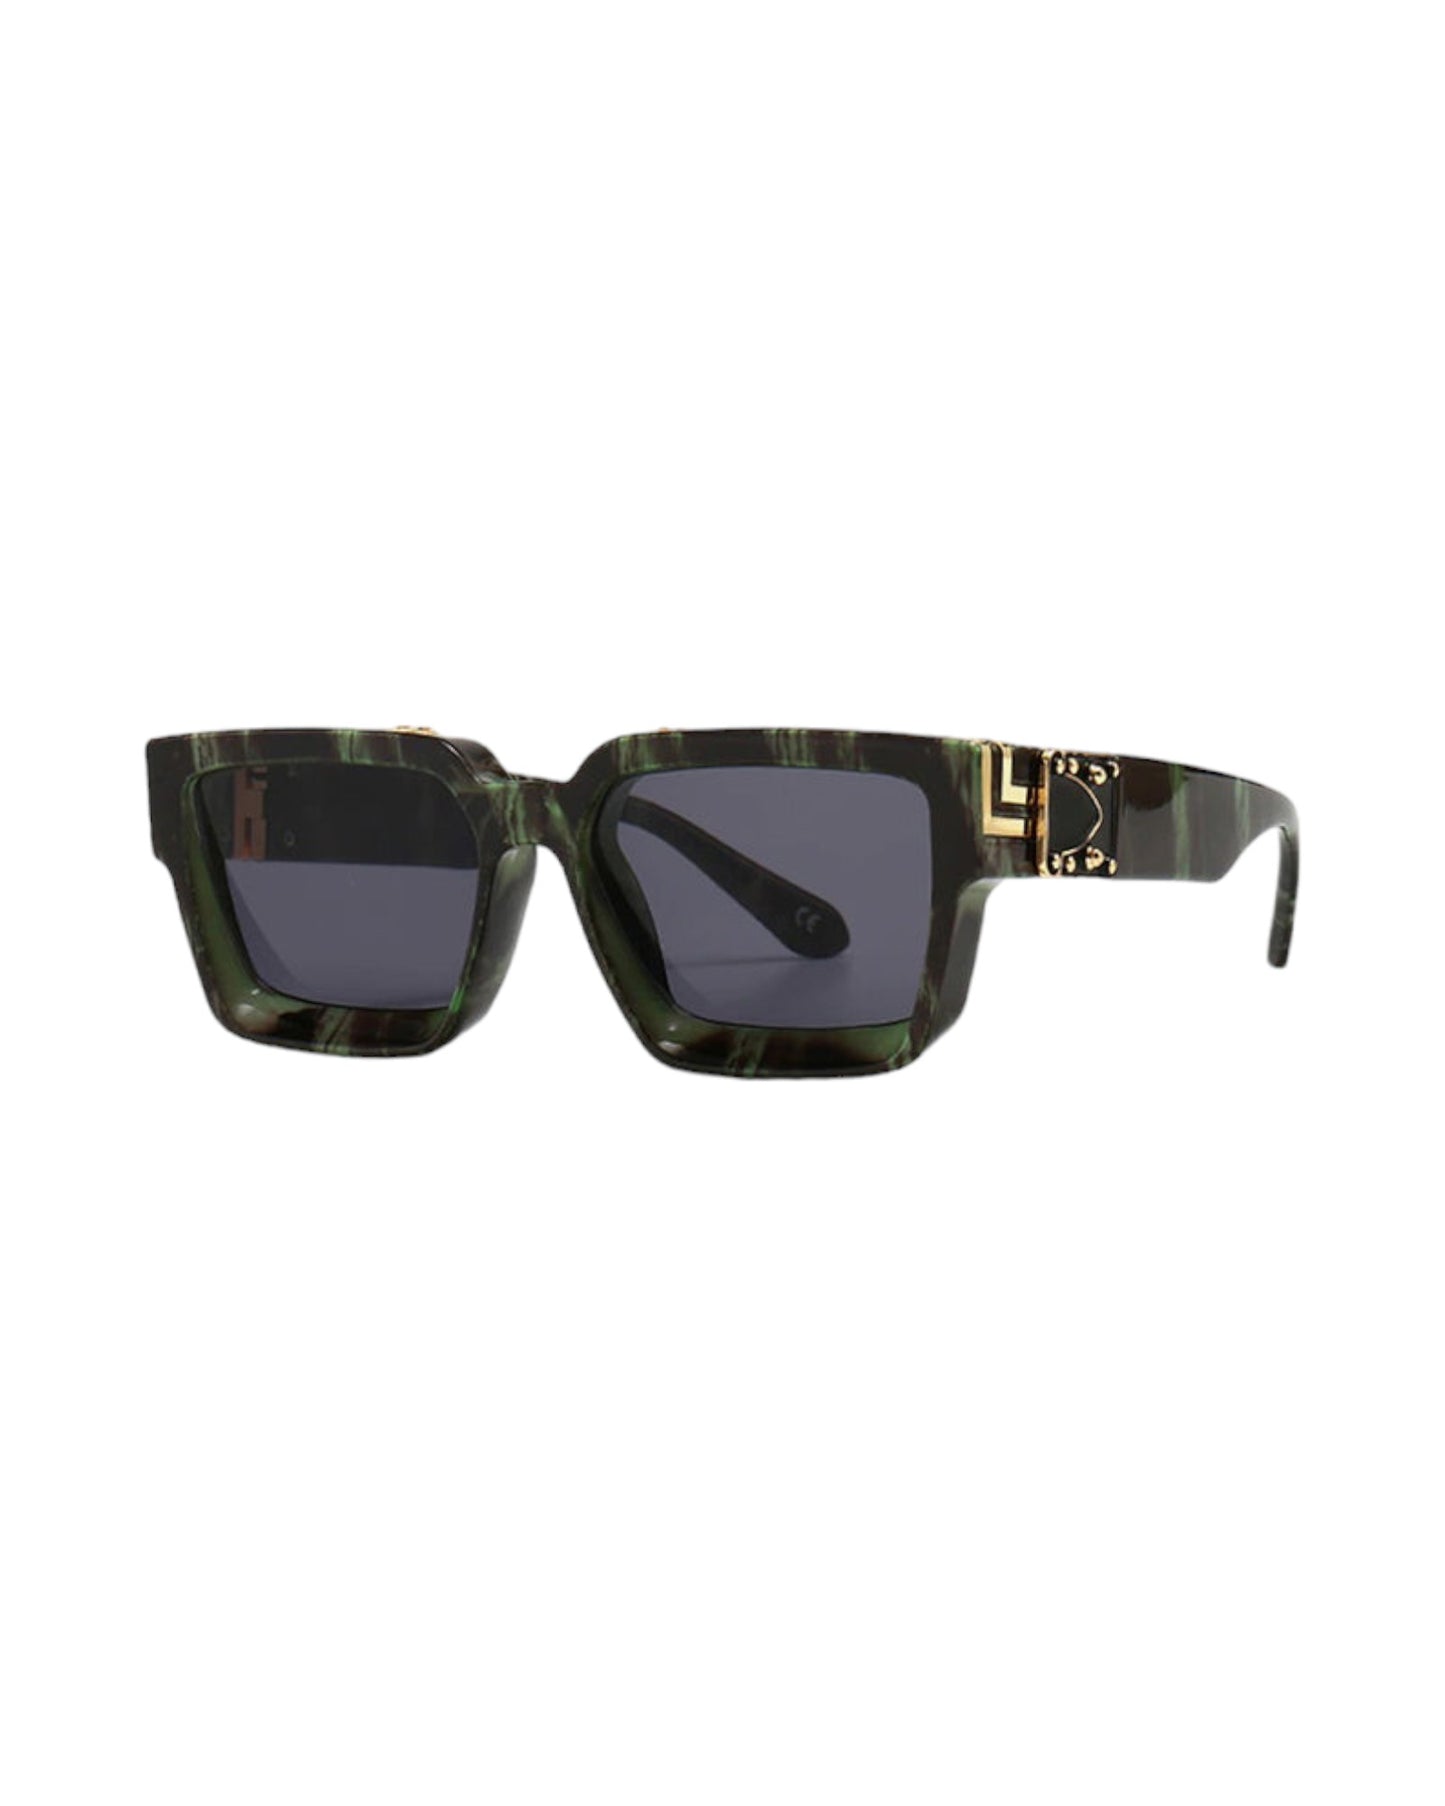 AUSTIN rectangular square sunglasses eyewear shades retro green frame black lens festival fashion